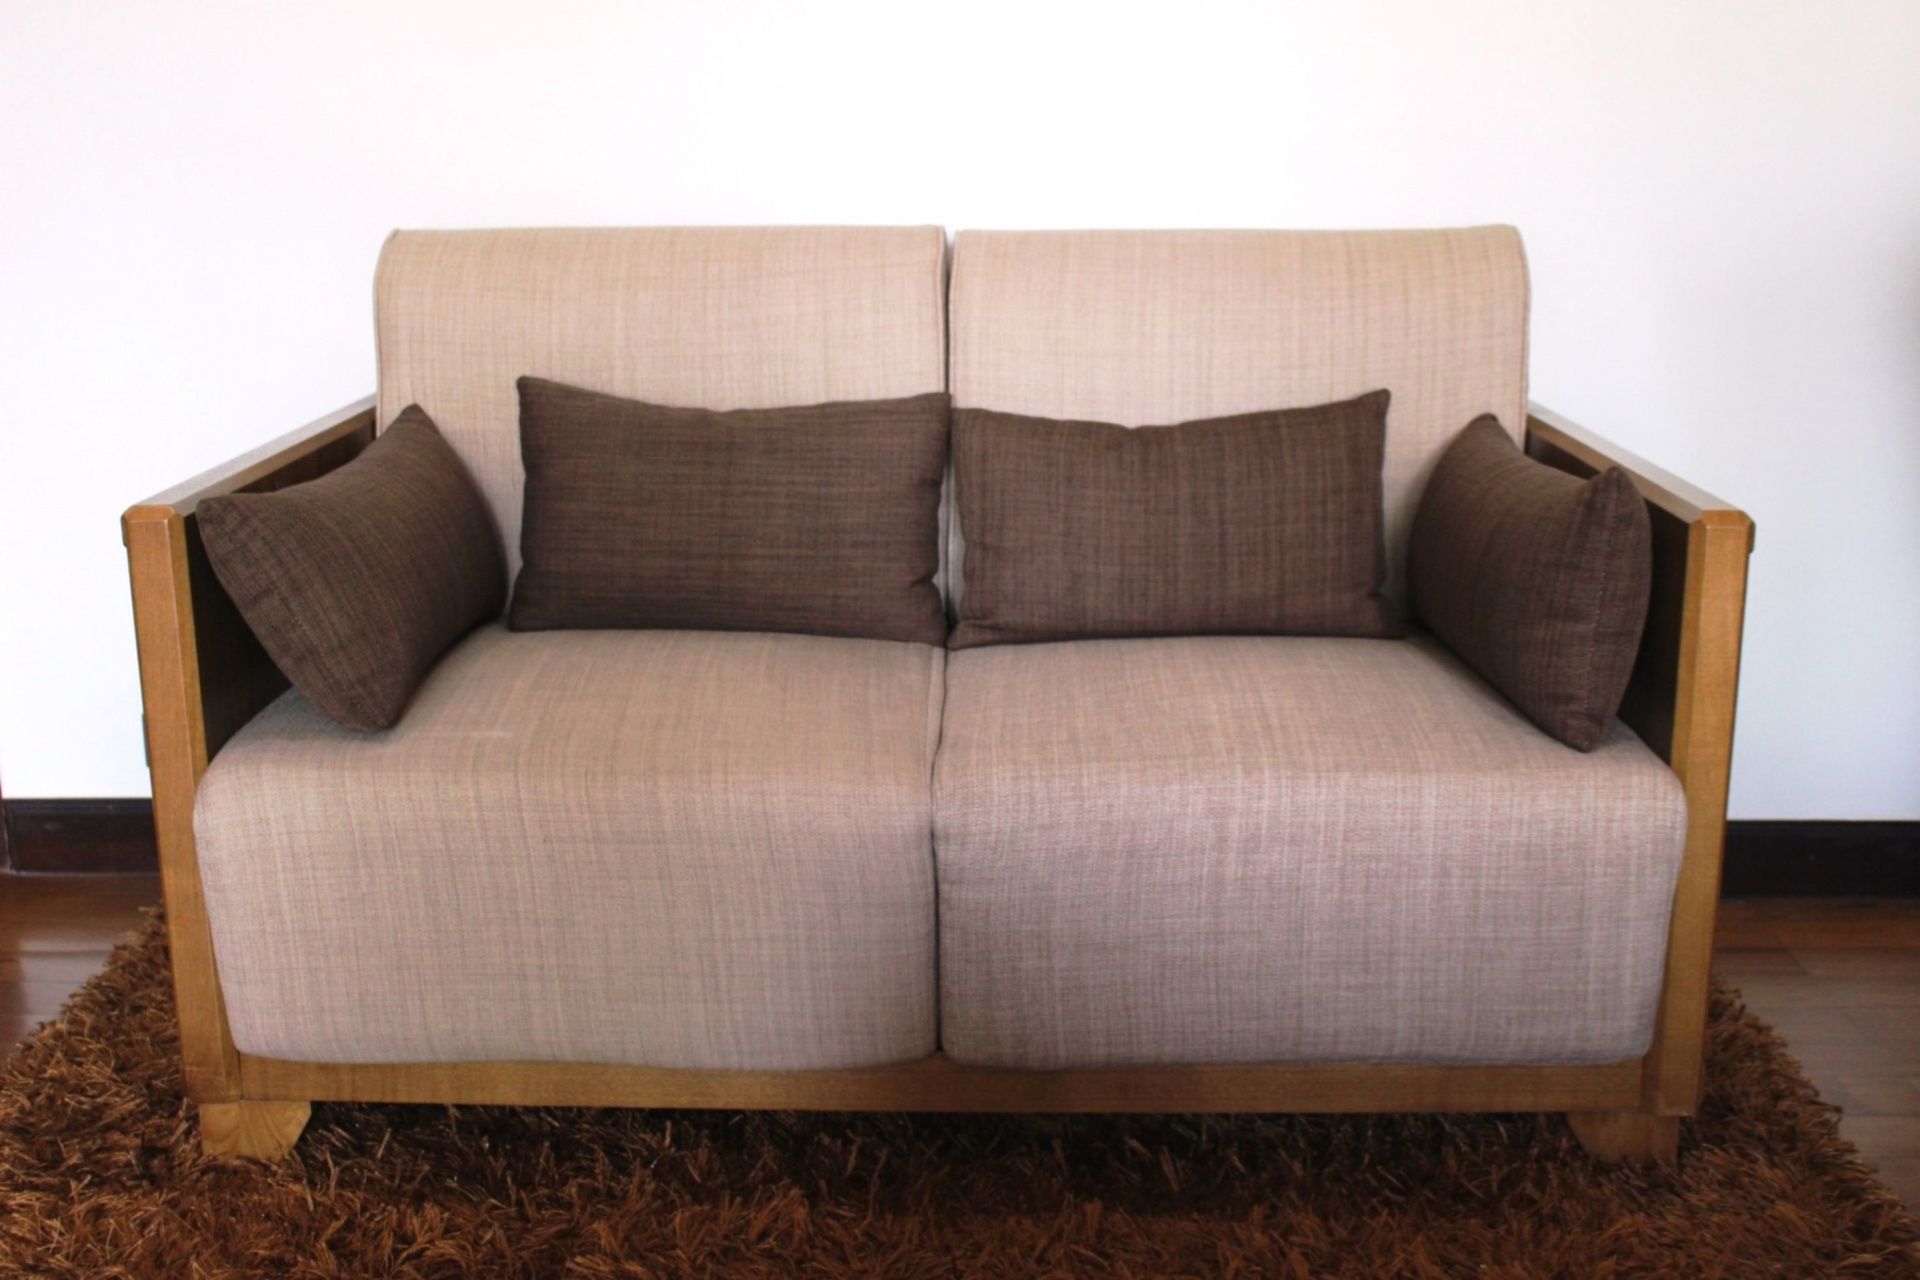 Living Room Sofa Make Out Of Polliws